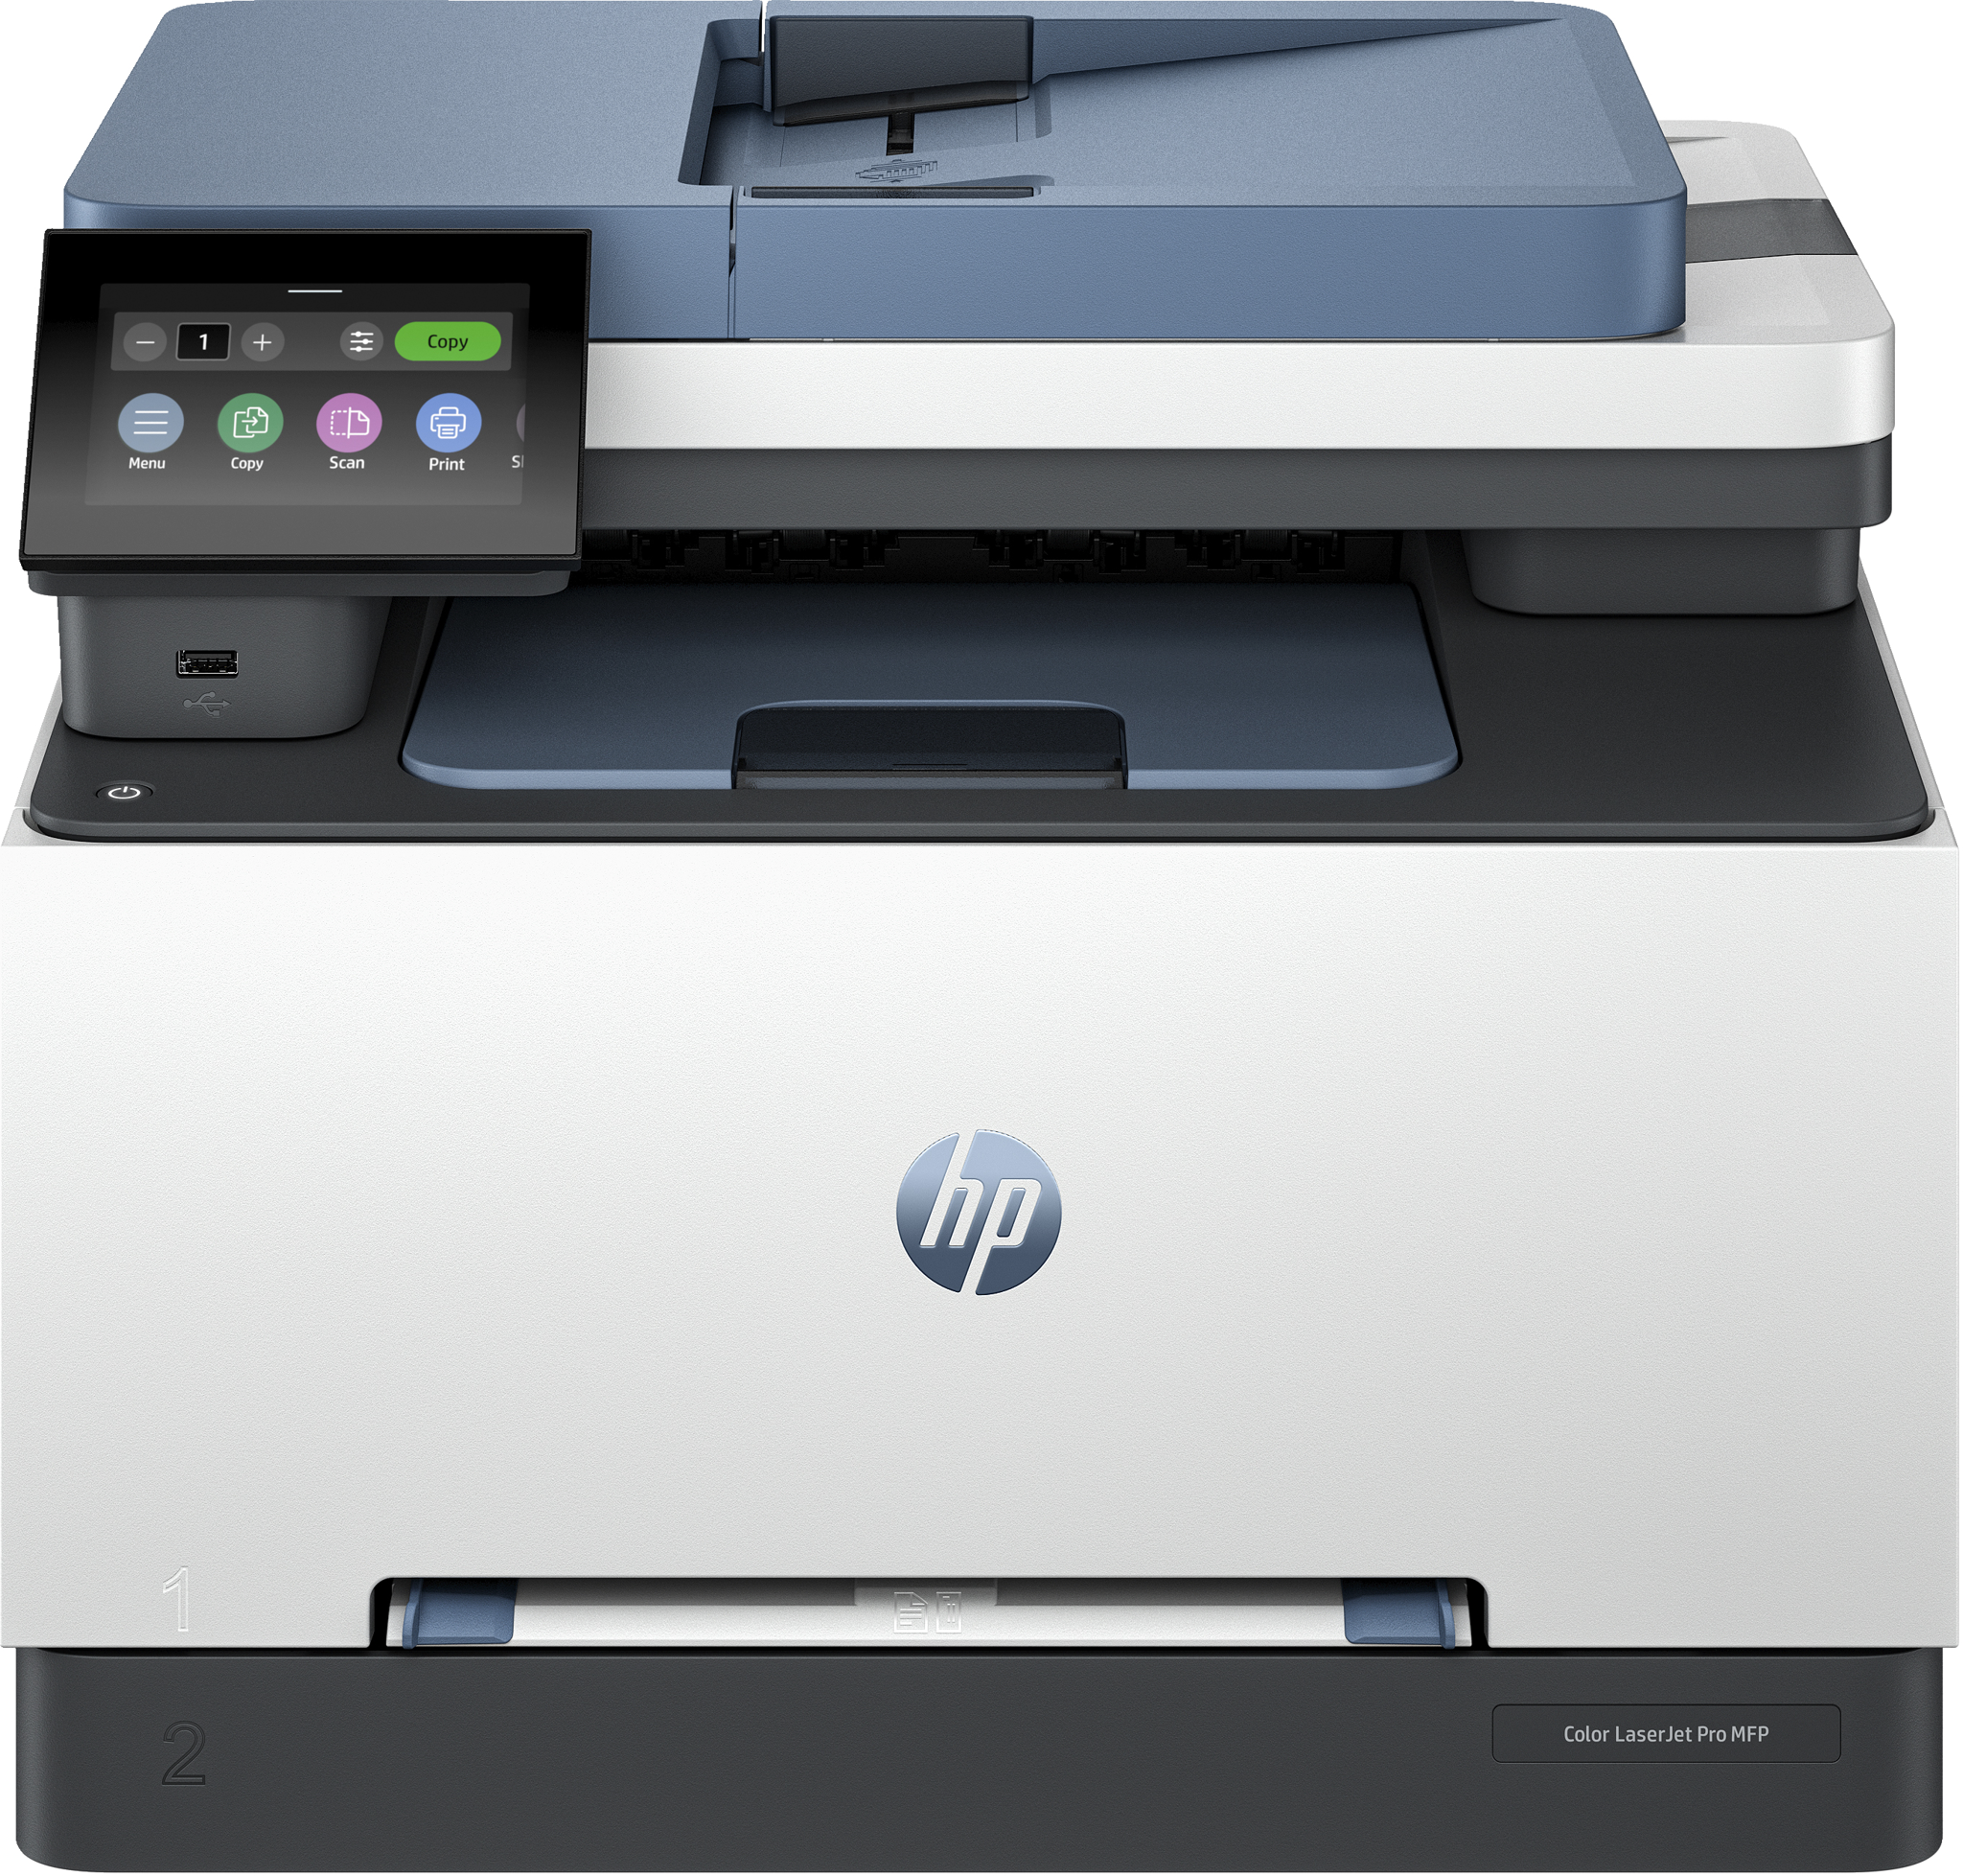 Bild von HP Color LaserJet Pro MFP 3302fdw, Laser, Farbdruck, 600 x 600 DPI, A4, Direktdruck, Blau, Grau, Weiß